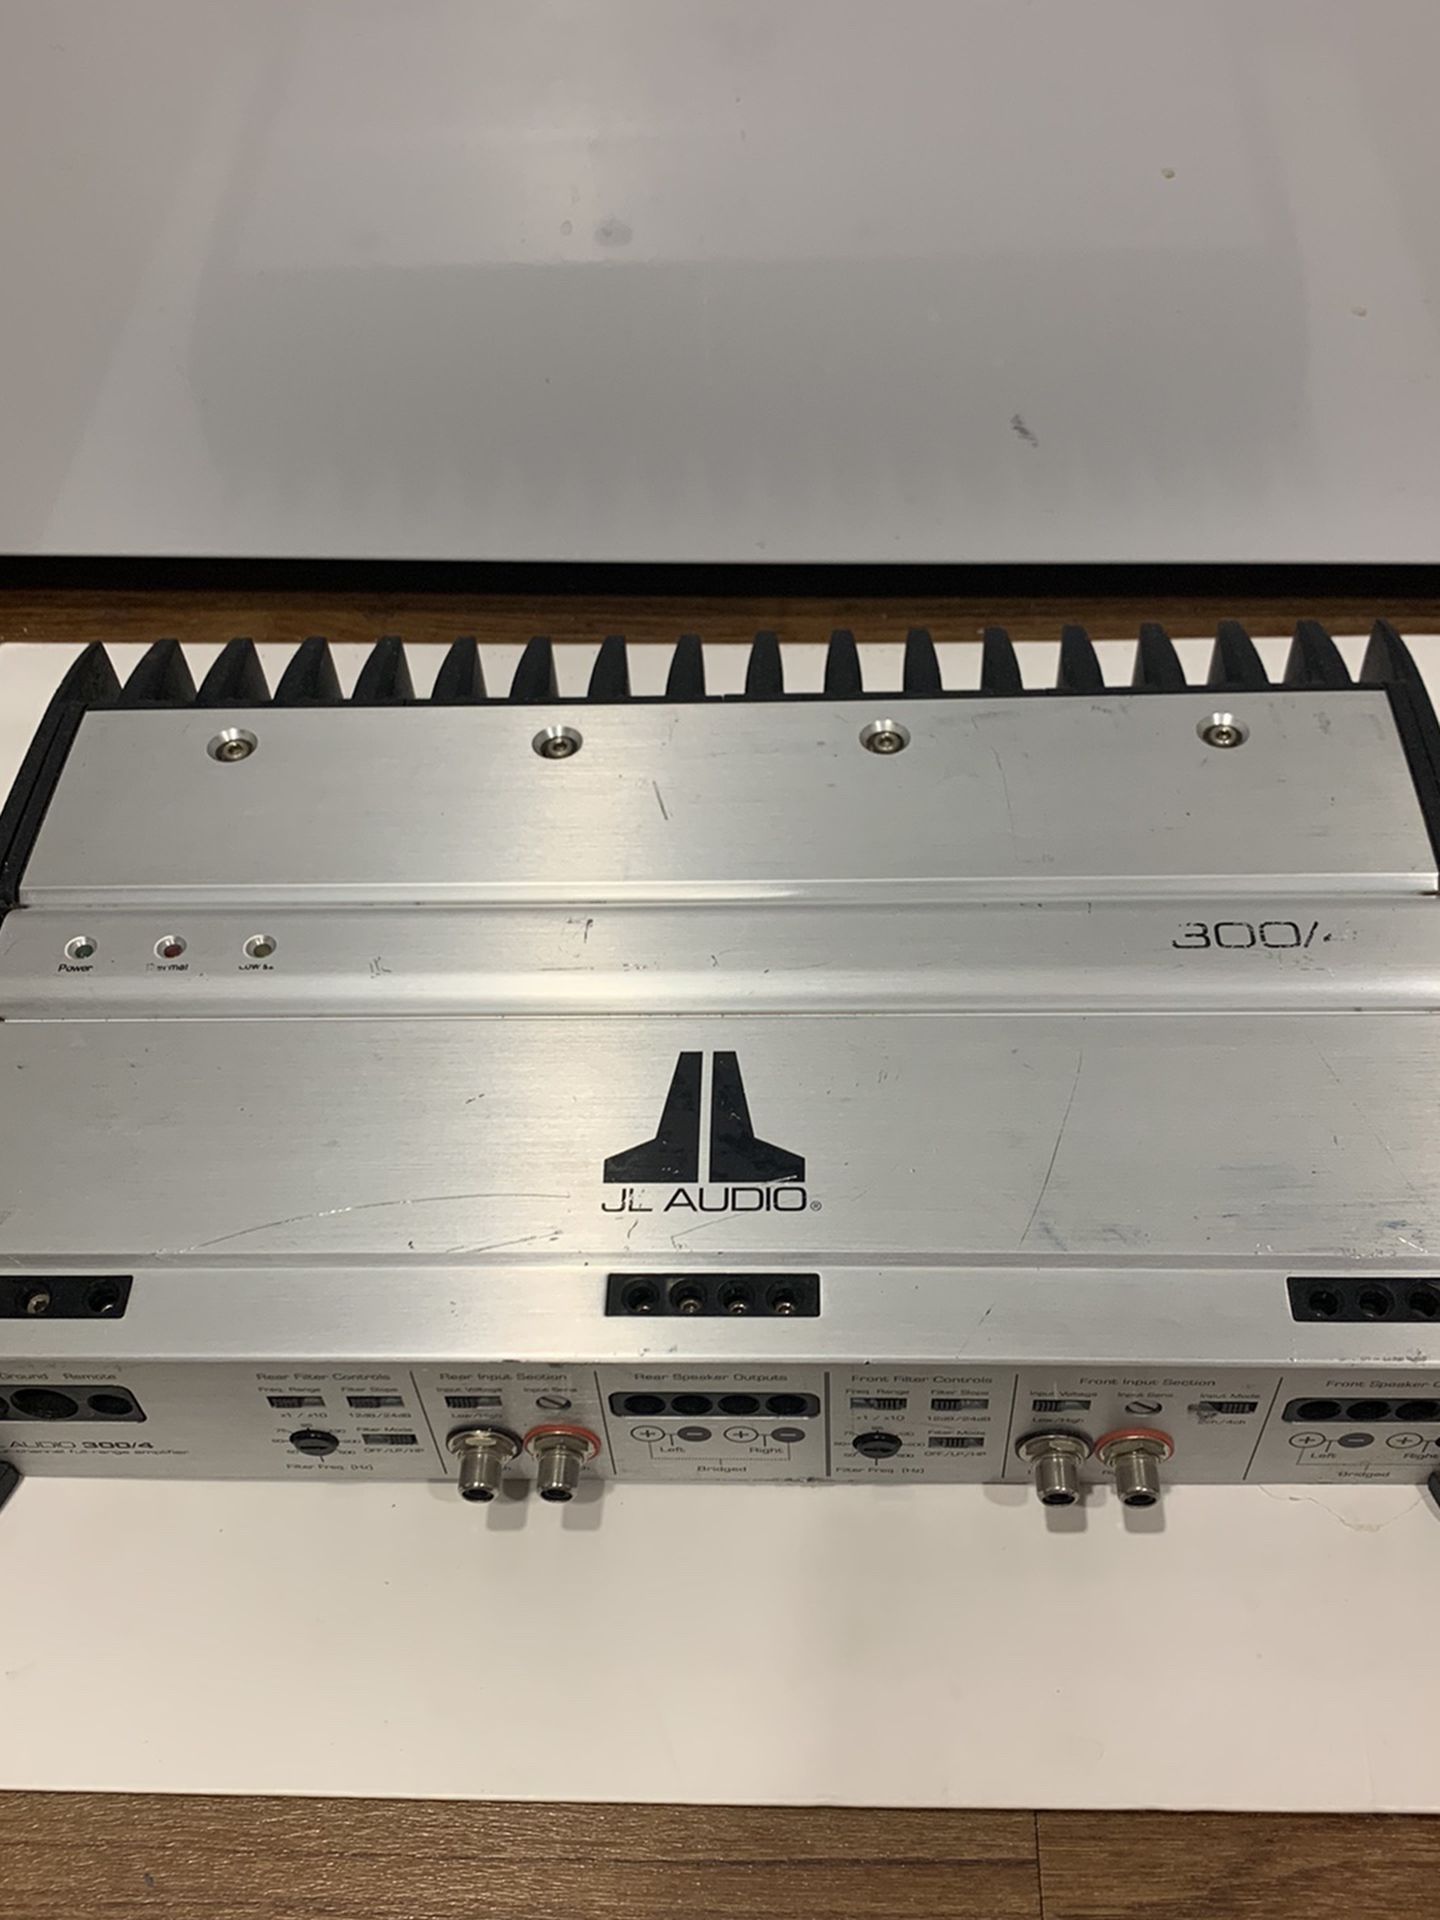 JL Audio 300/4 Amplifier